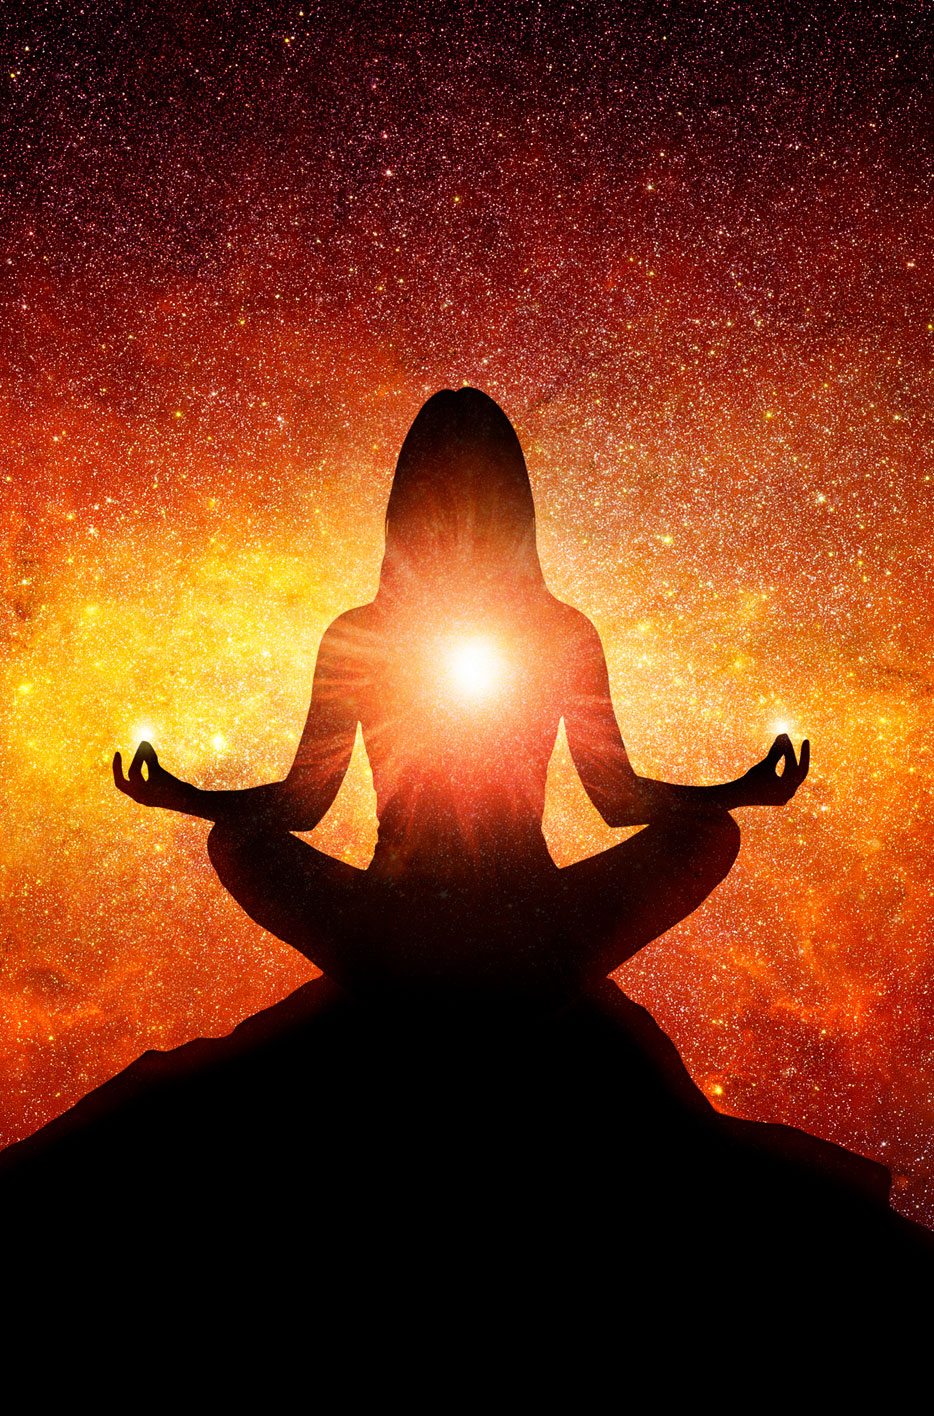 woman meditating on heart chakra with stars